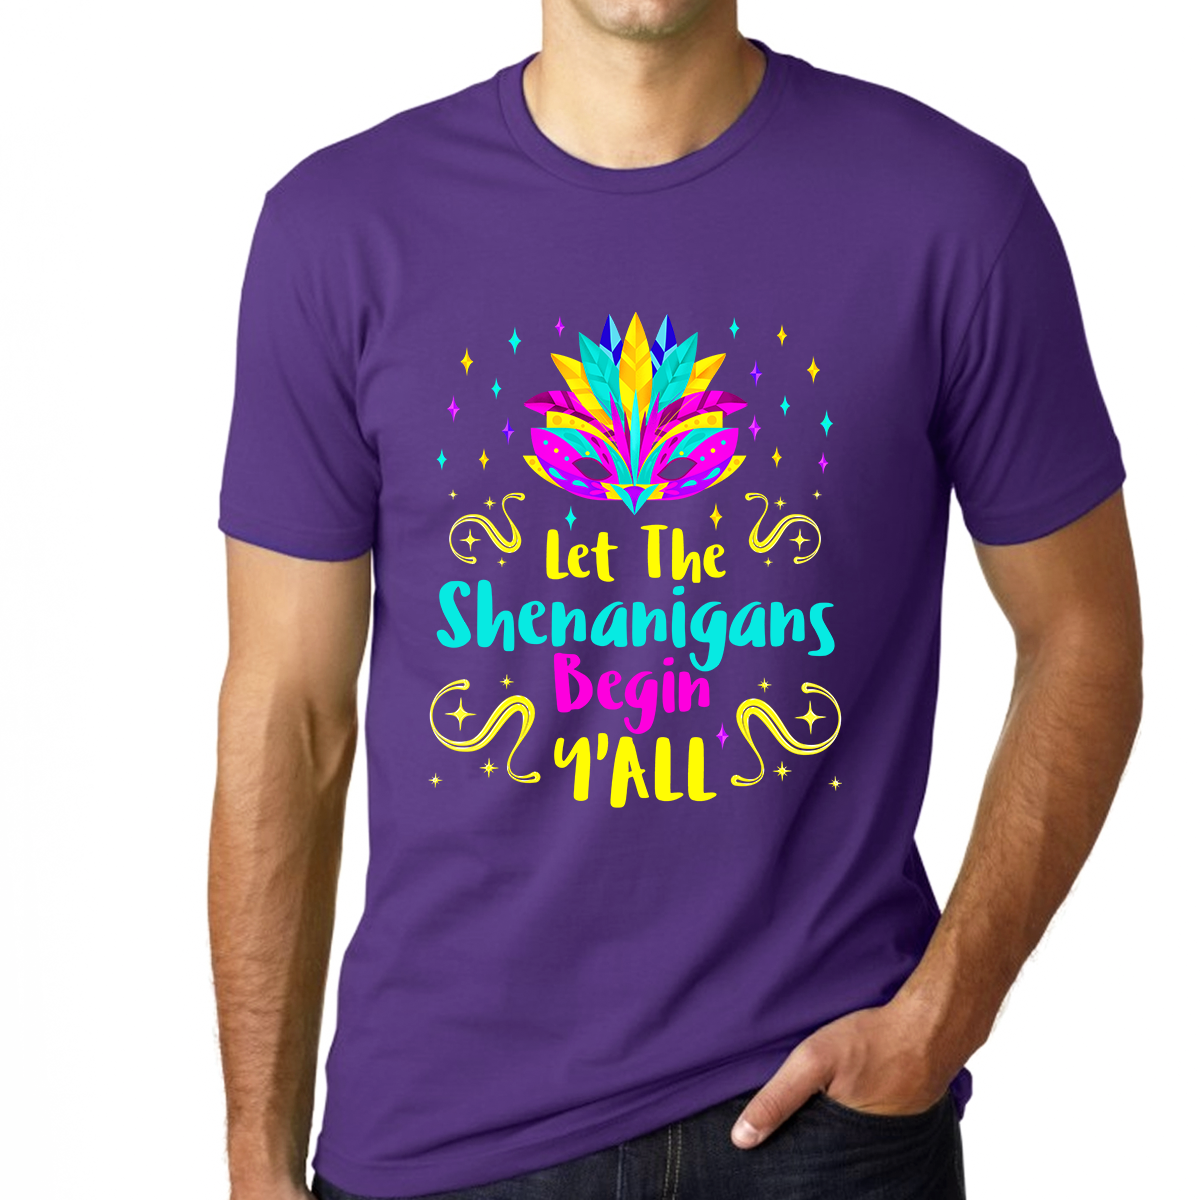 Funny Mardi Gras Shirts for Men Mardi Gras Outfit for Men Let The Shenanigans Begin Yall Shirt NOLA